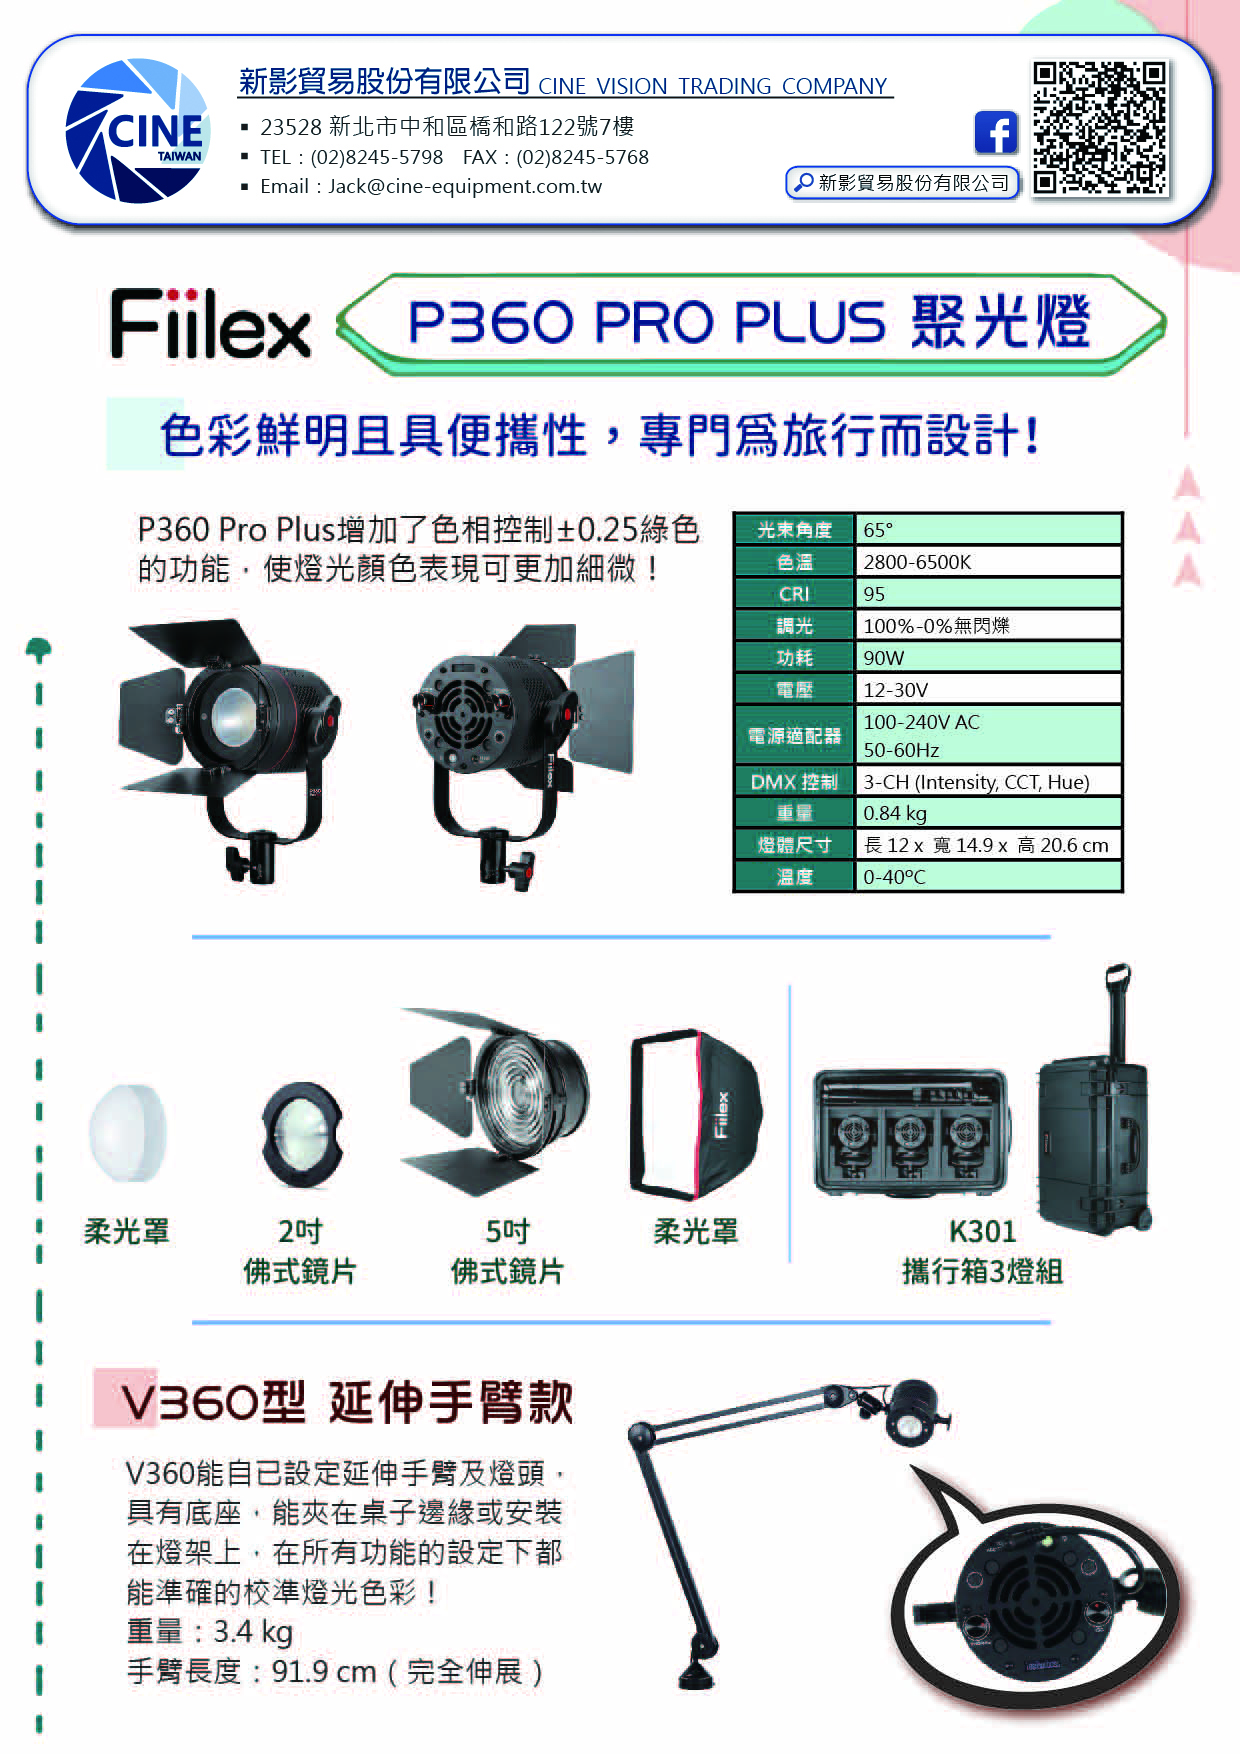 Fiilex P360 PRO PLUS 聚光燈- 新影公司CINE VISION